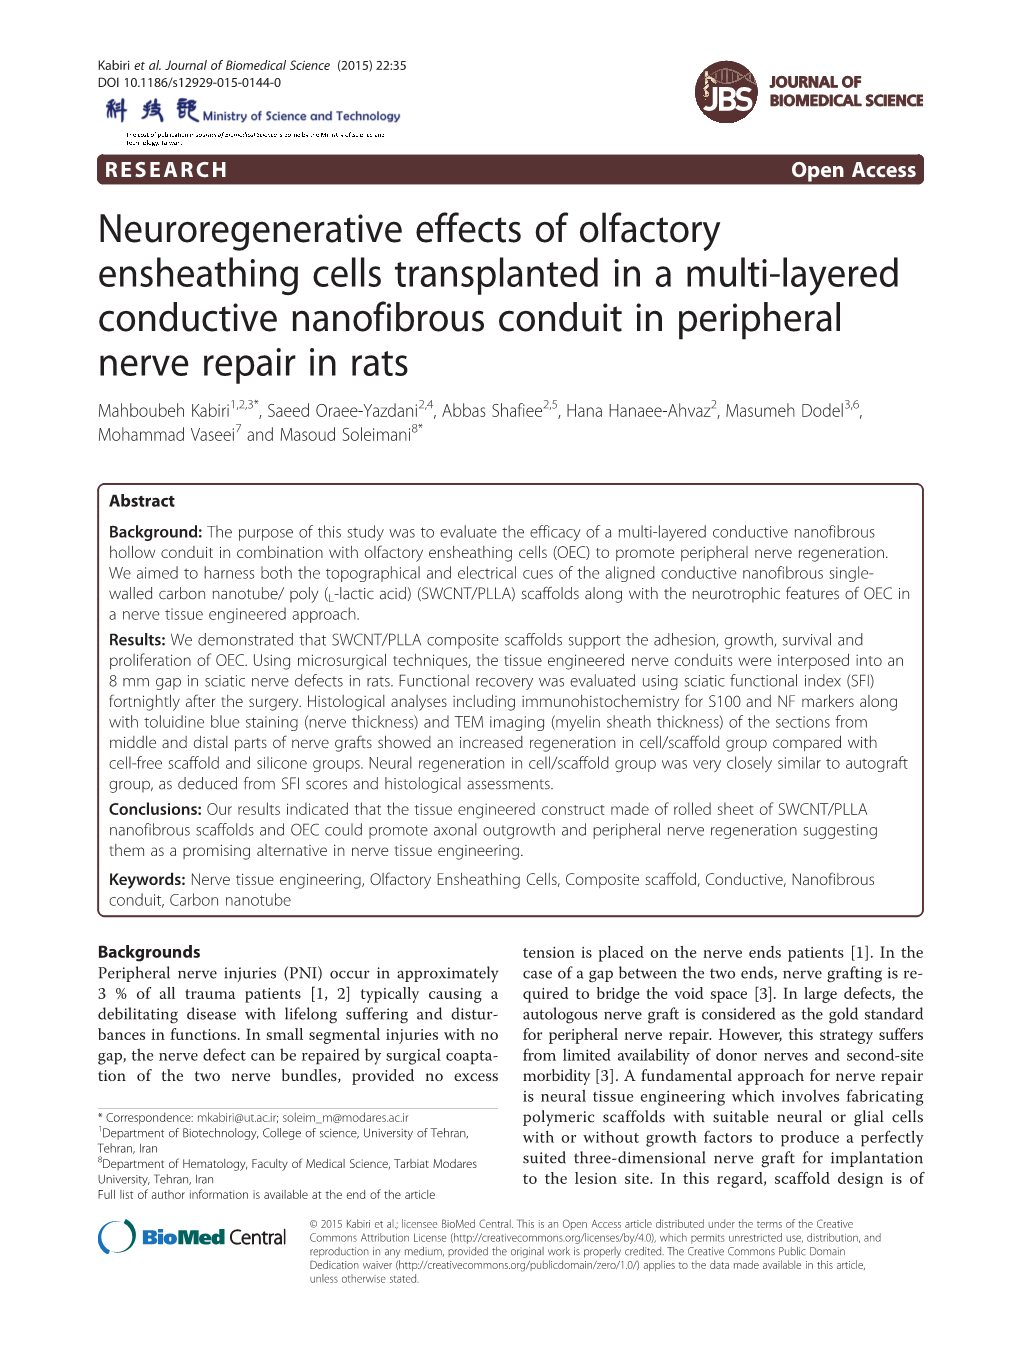 Neuroregenerative Effects of Olfactory Ensheathing Cells Transplanted in A